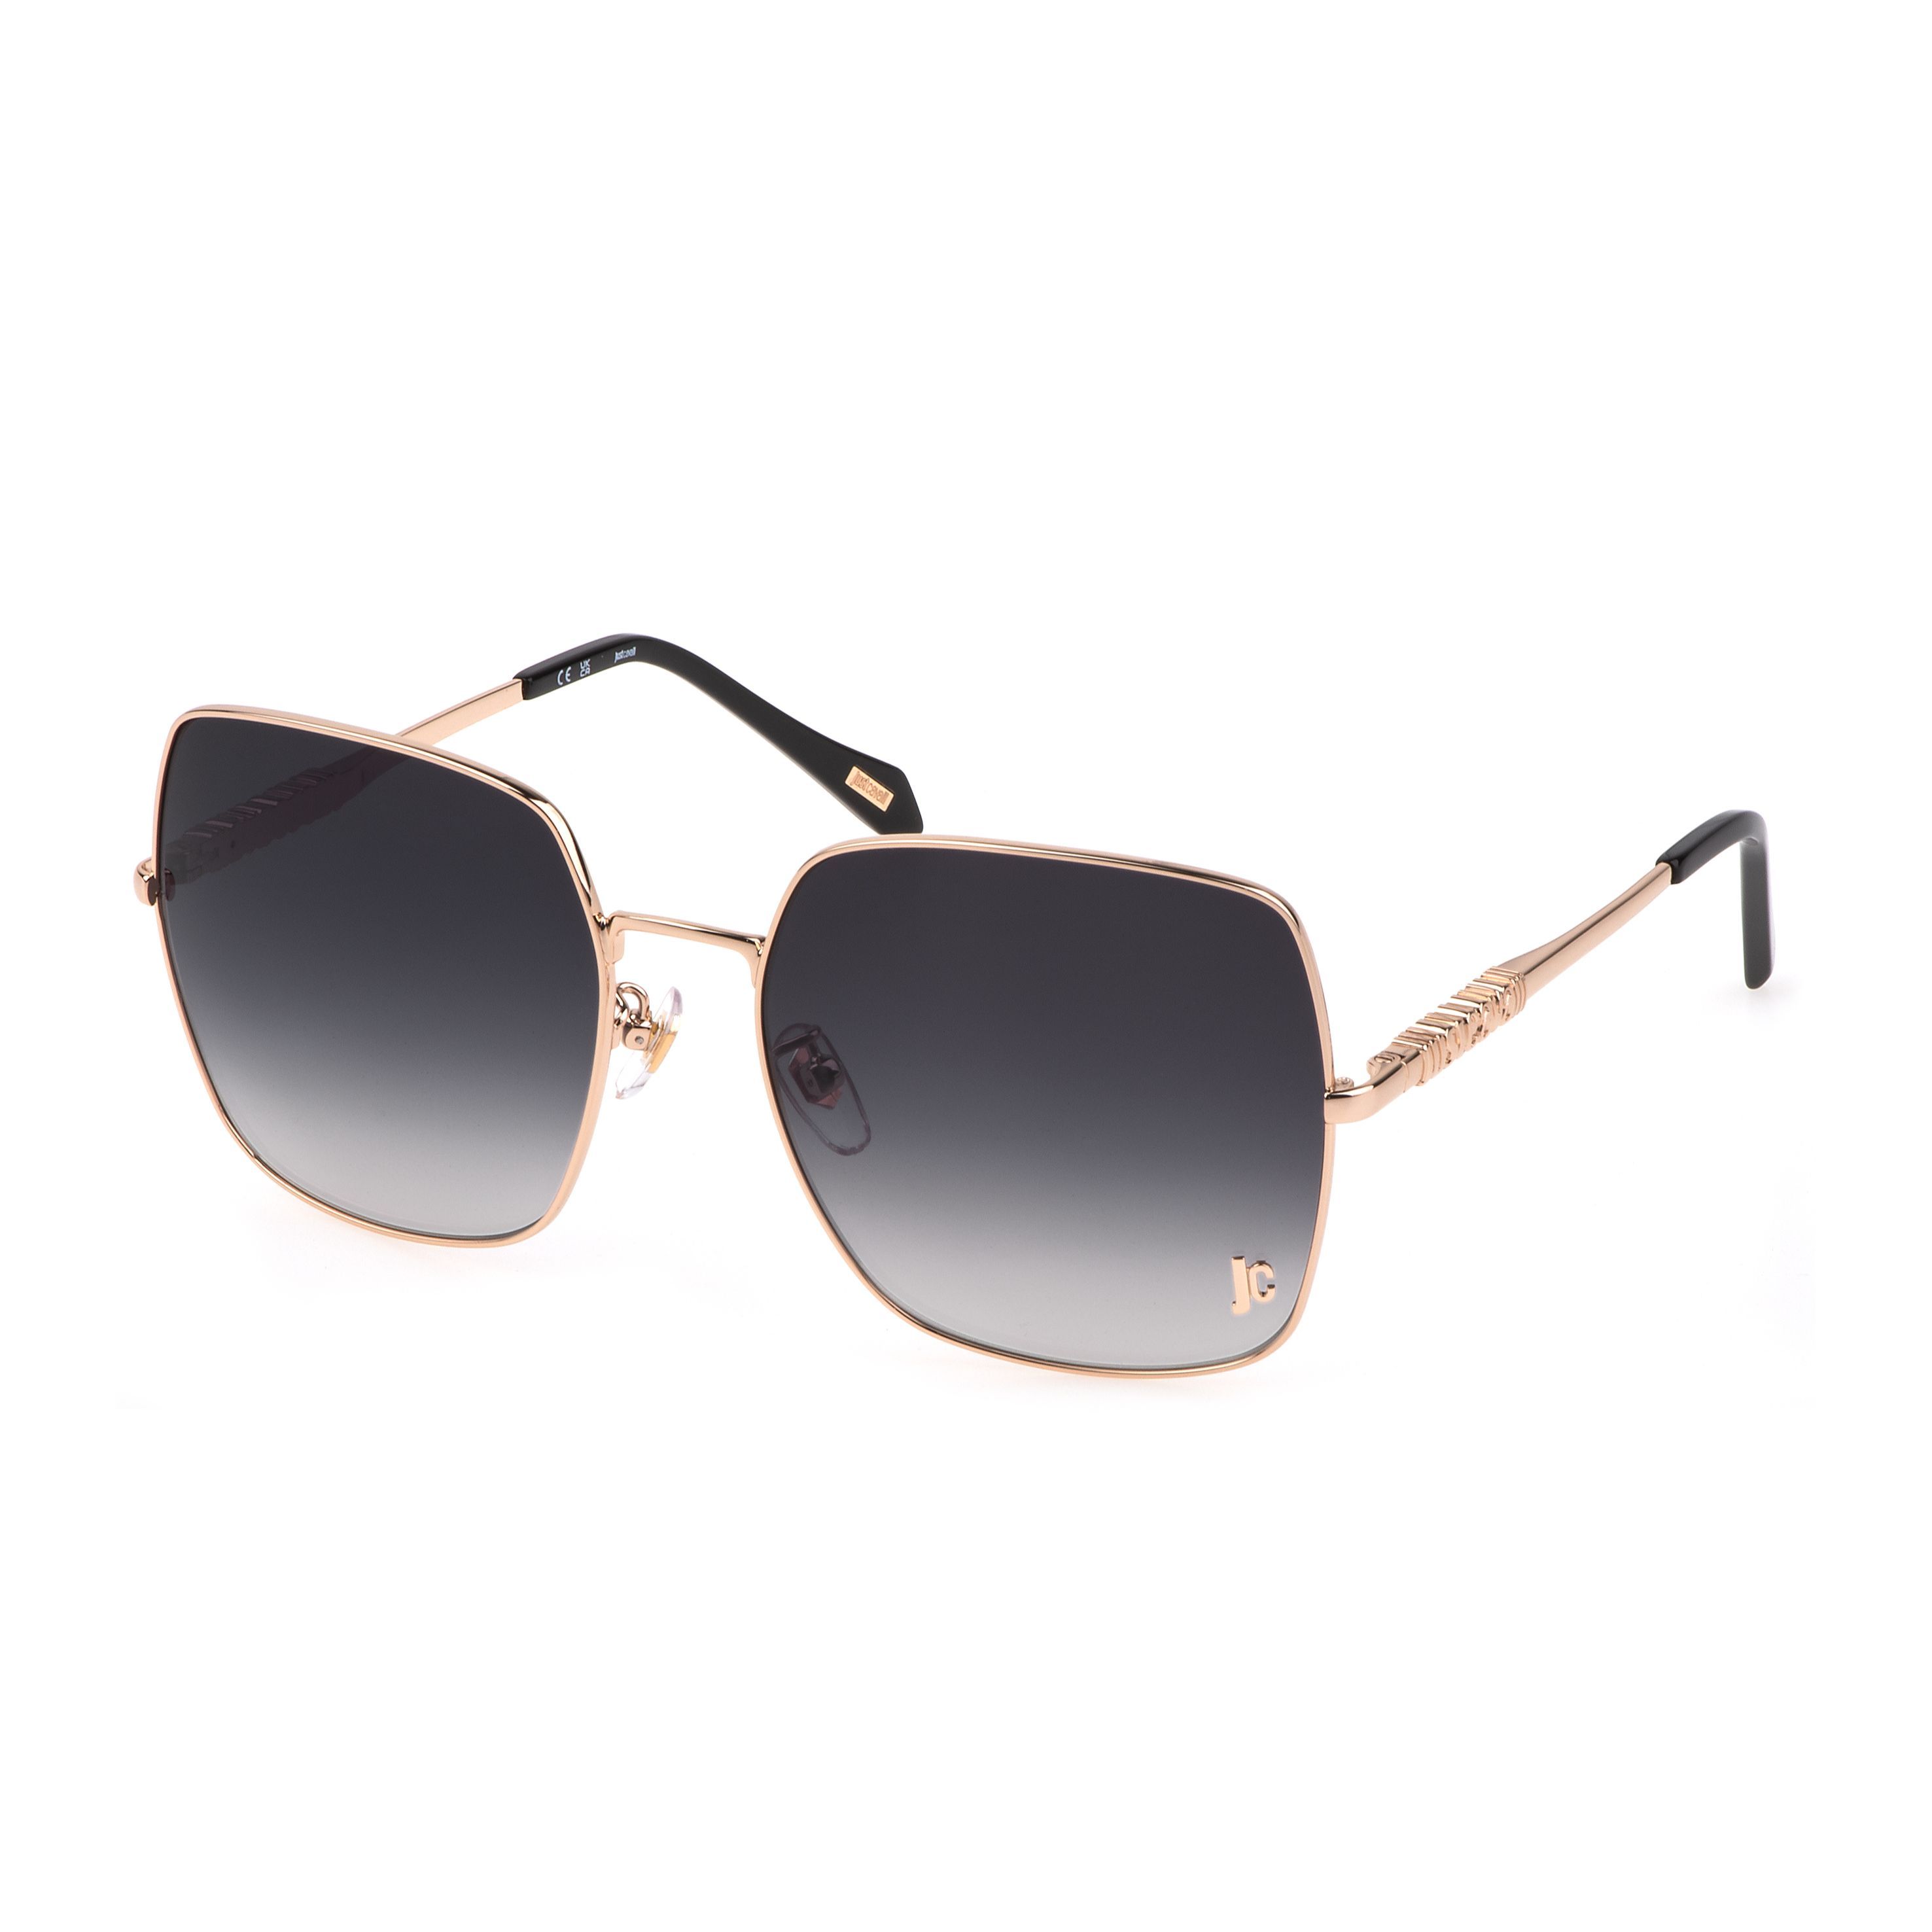 SJC031 Square Sunglasses 349 - size 60